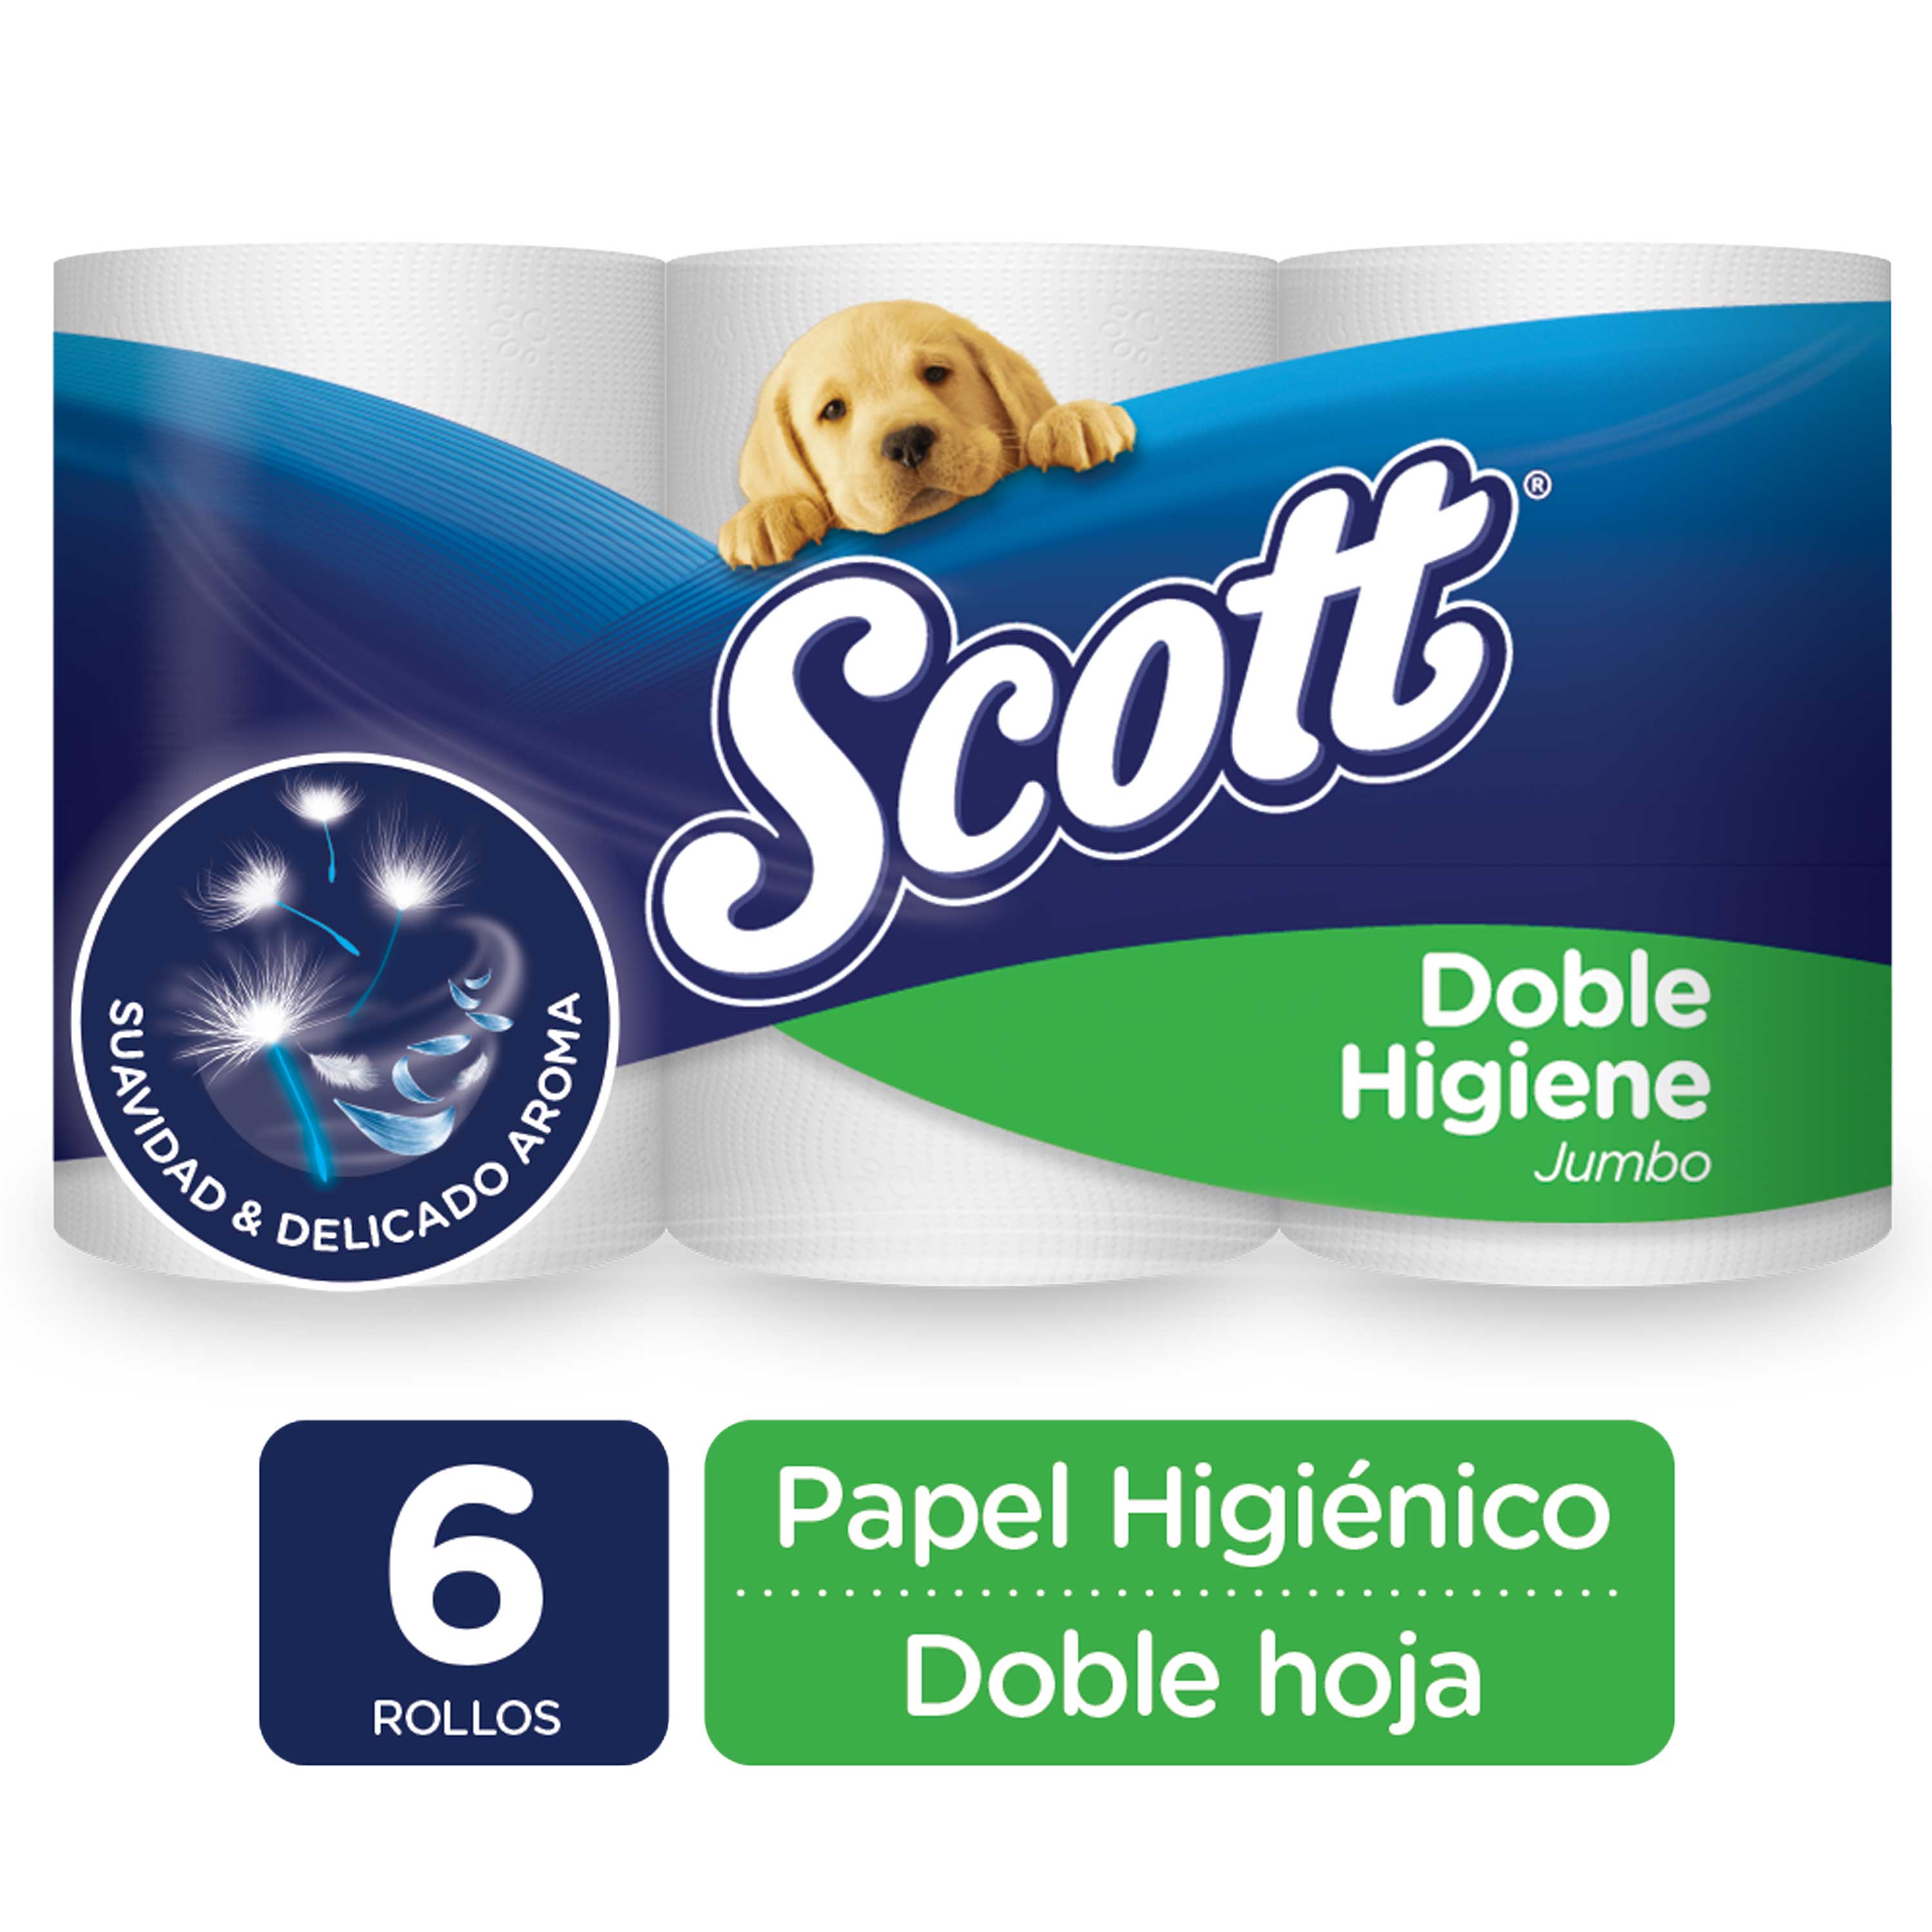 Papel Higienico Doble Hoja Scott Aromas 6rollosx22m